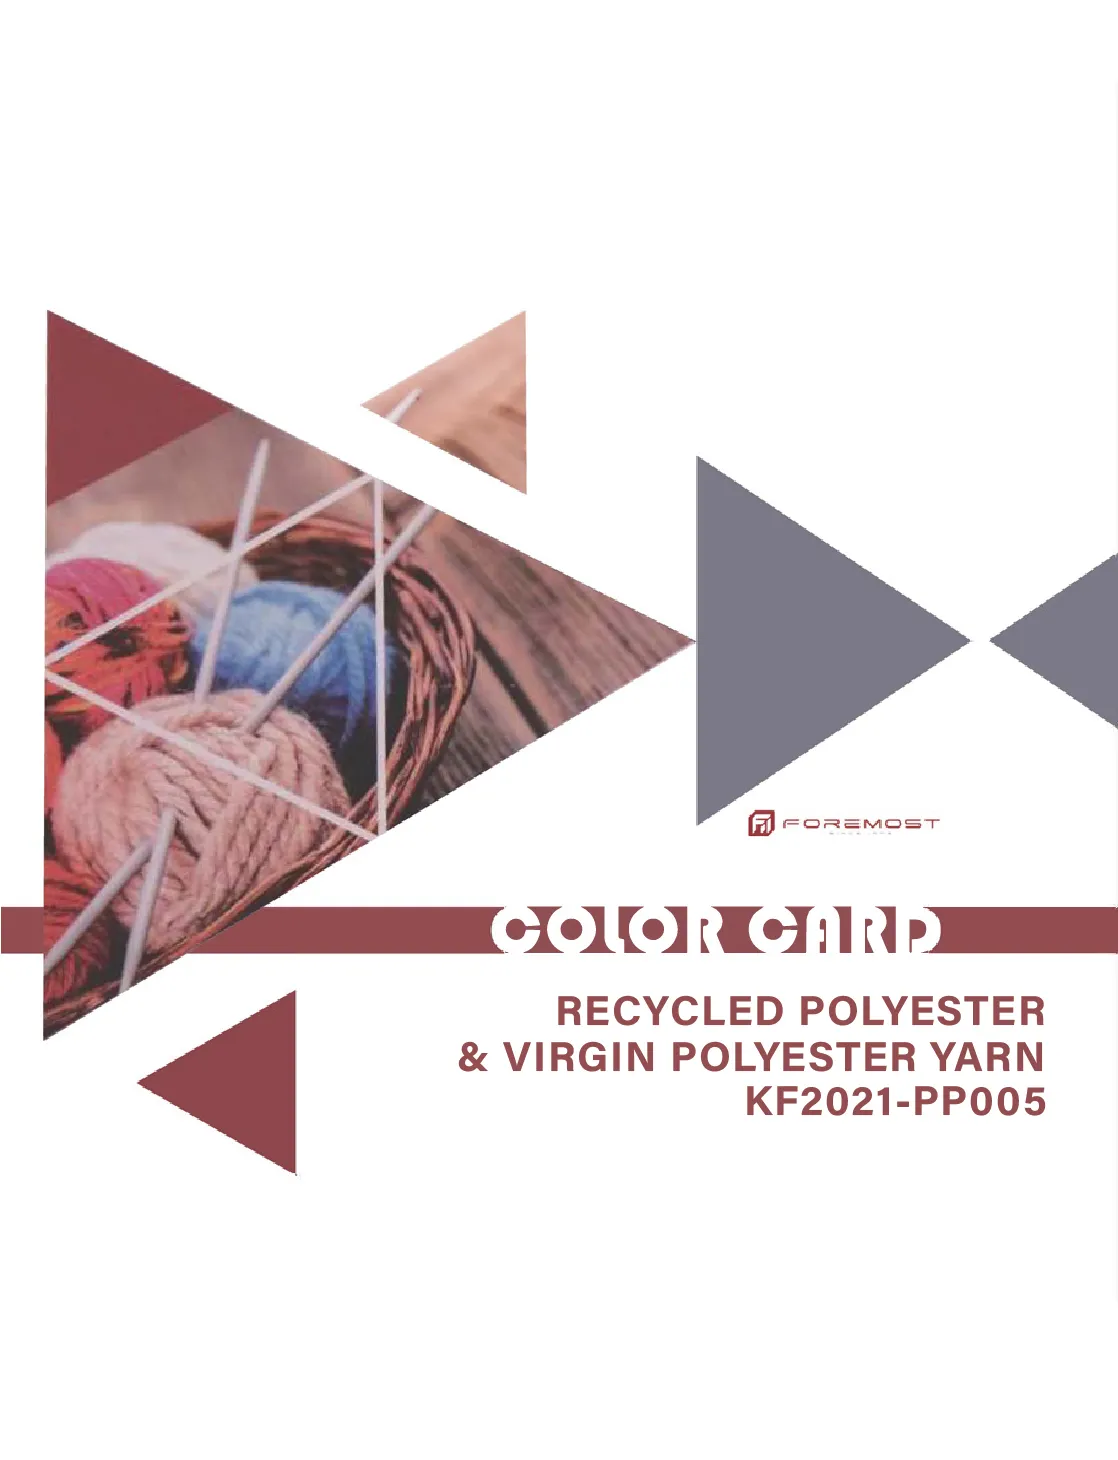 KF2021-PP005 polyester recyclé et fils de polyester vierge